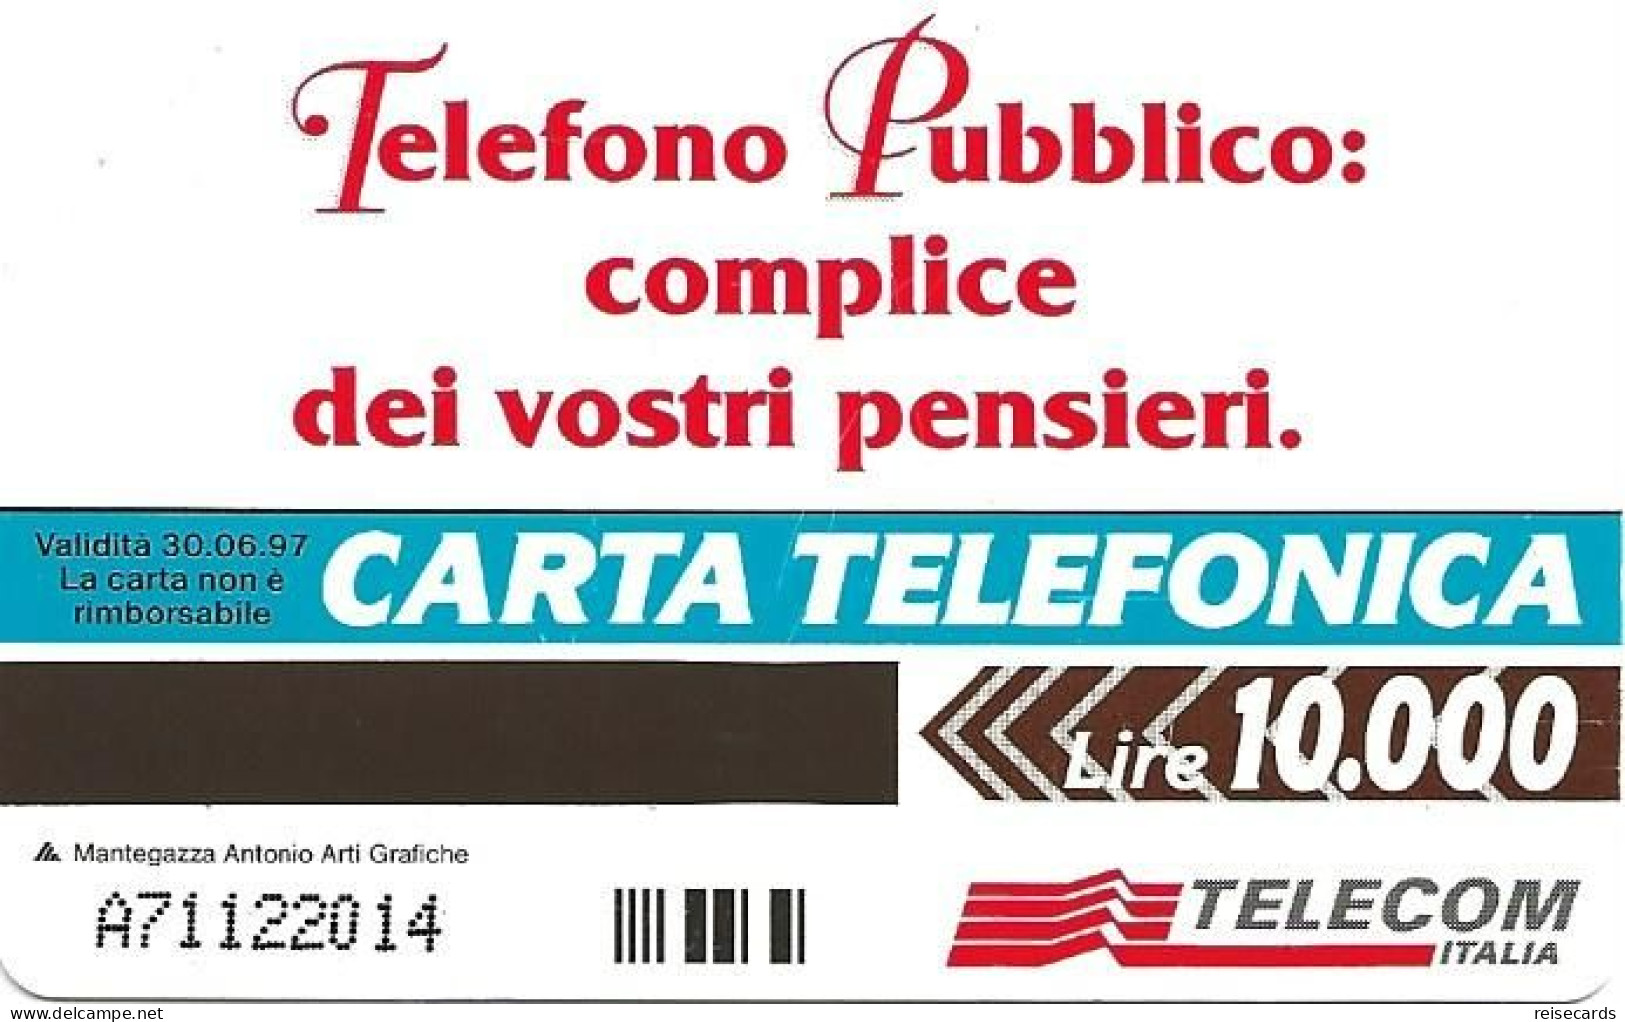 Italy: Telecom Italia - Telefono Pubblico (A) - Publiques Publicitaires